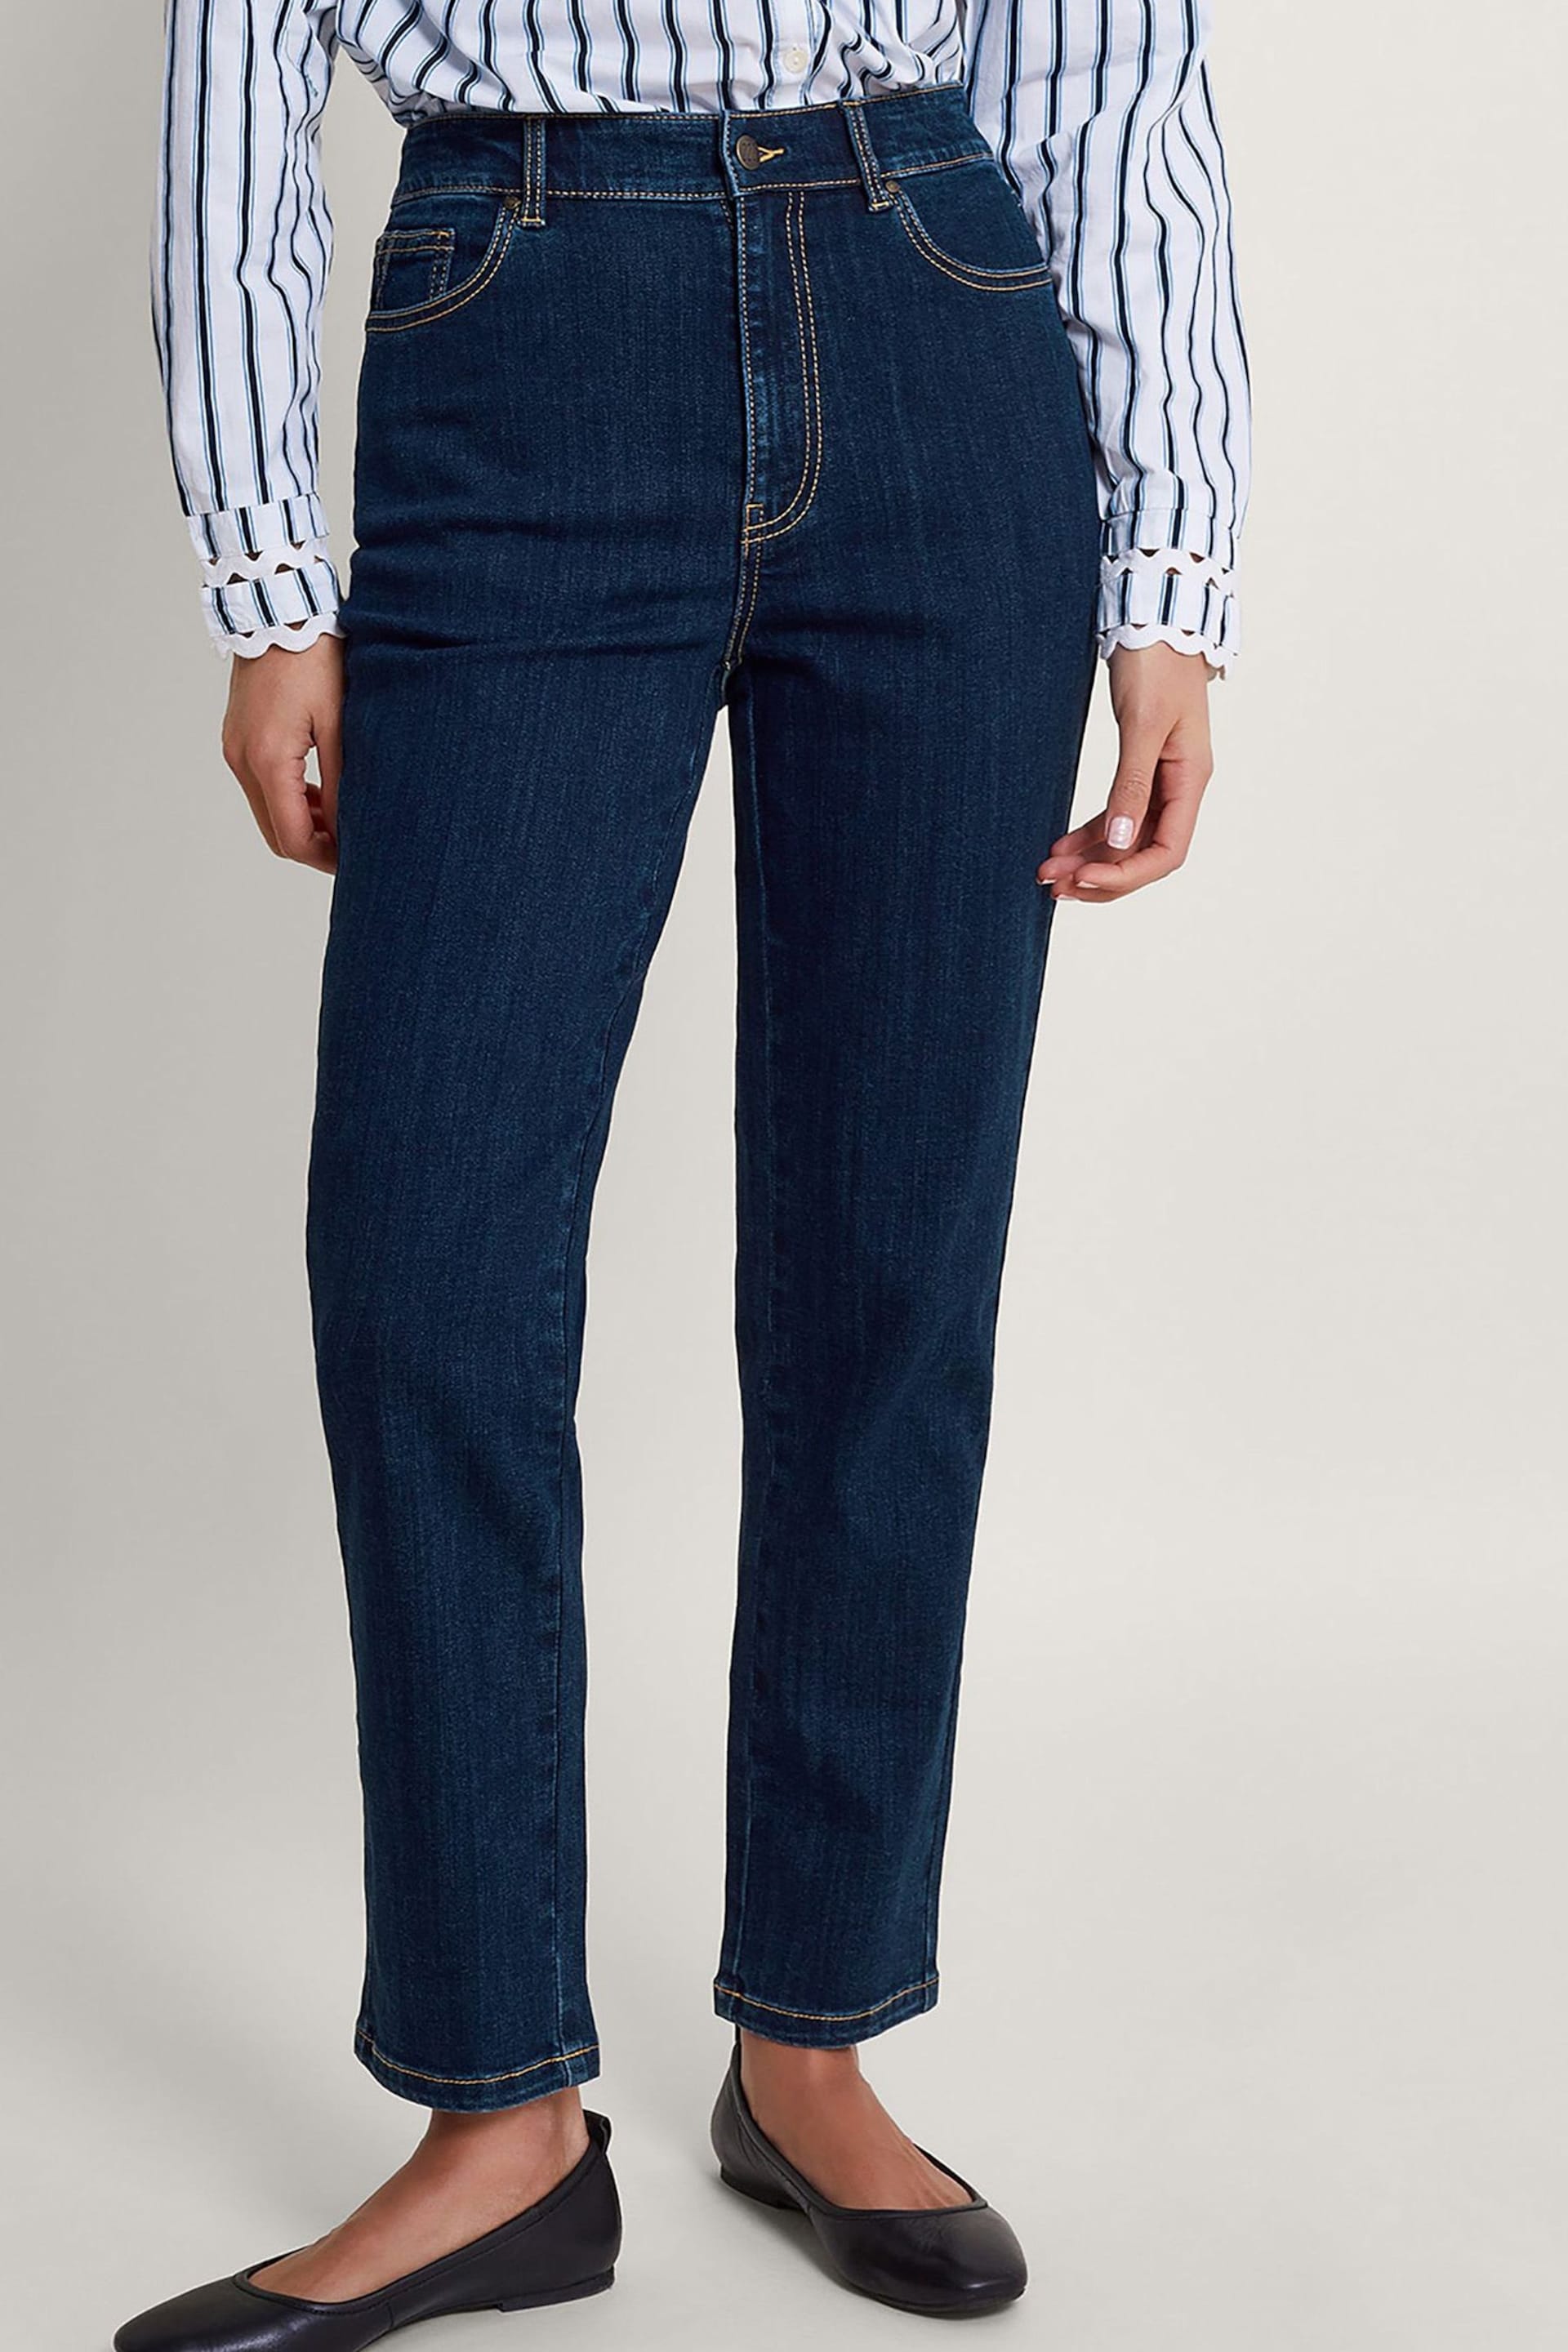 Monsoon Vera Slim Fit Jeans - Image 1 of 5